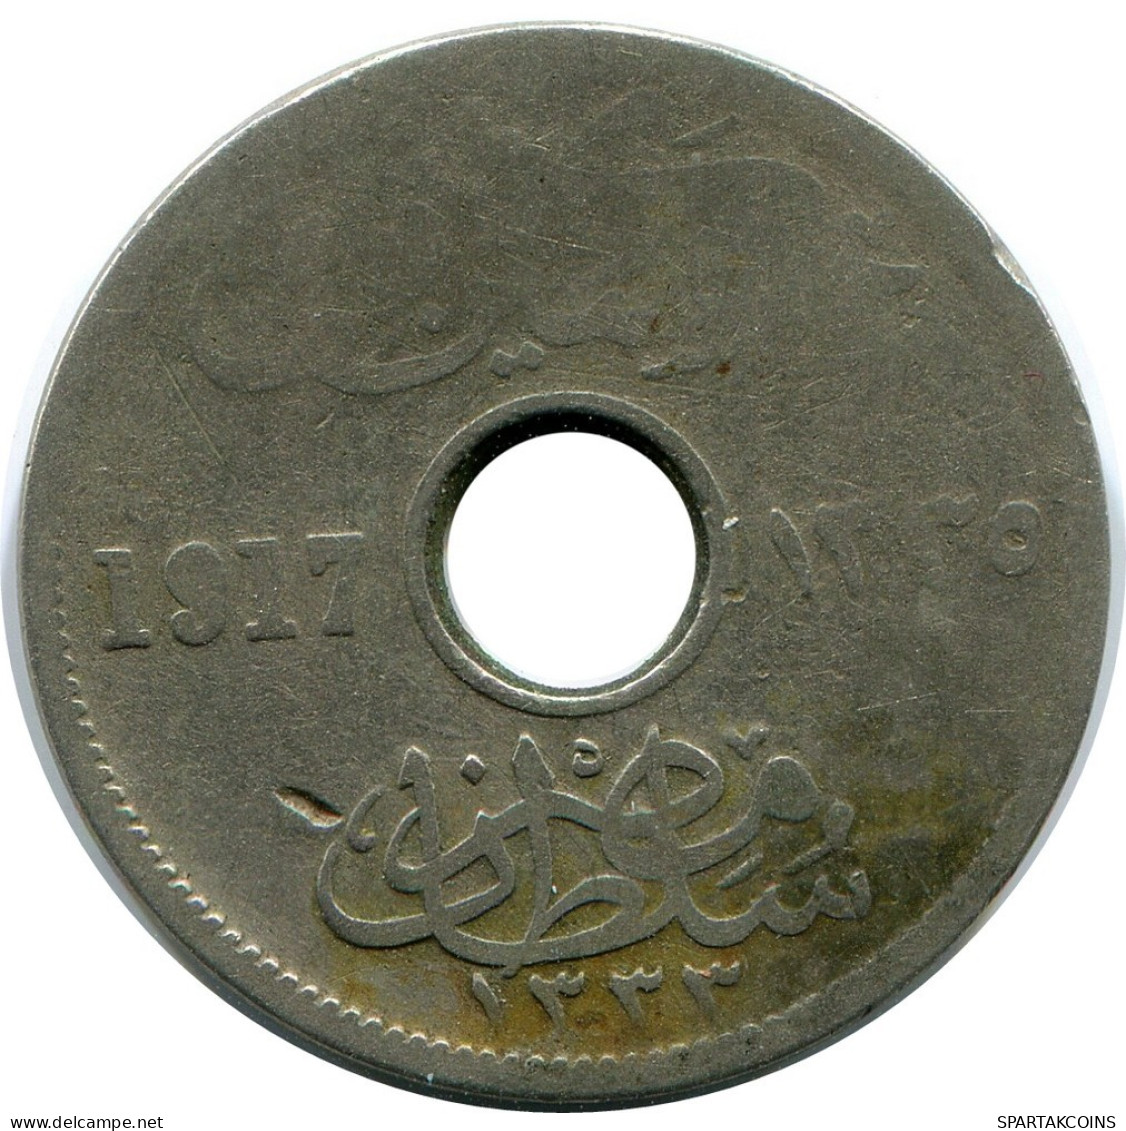 5 MILLIEMES 1917 EGIPTO EGYPT Moneda Hussein Kamil #AP153.E.A - Egypt